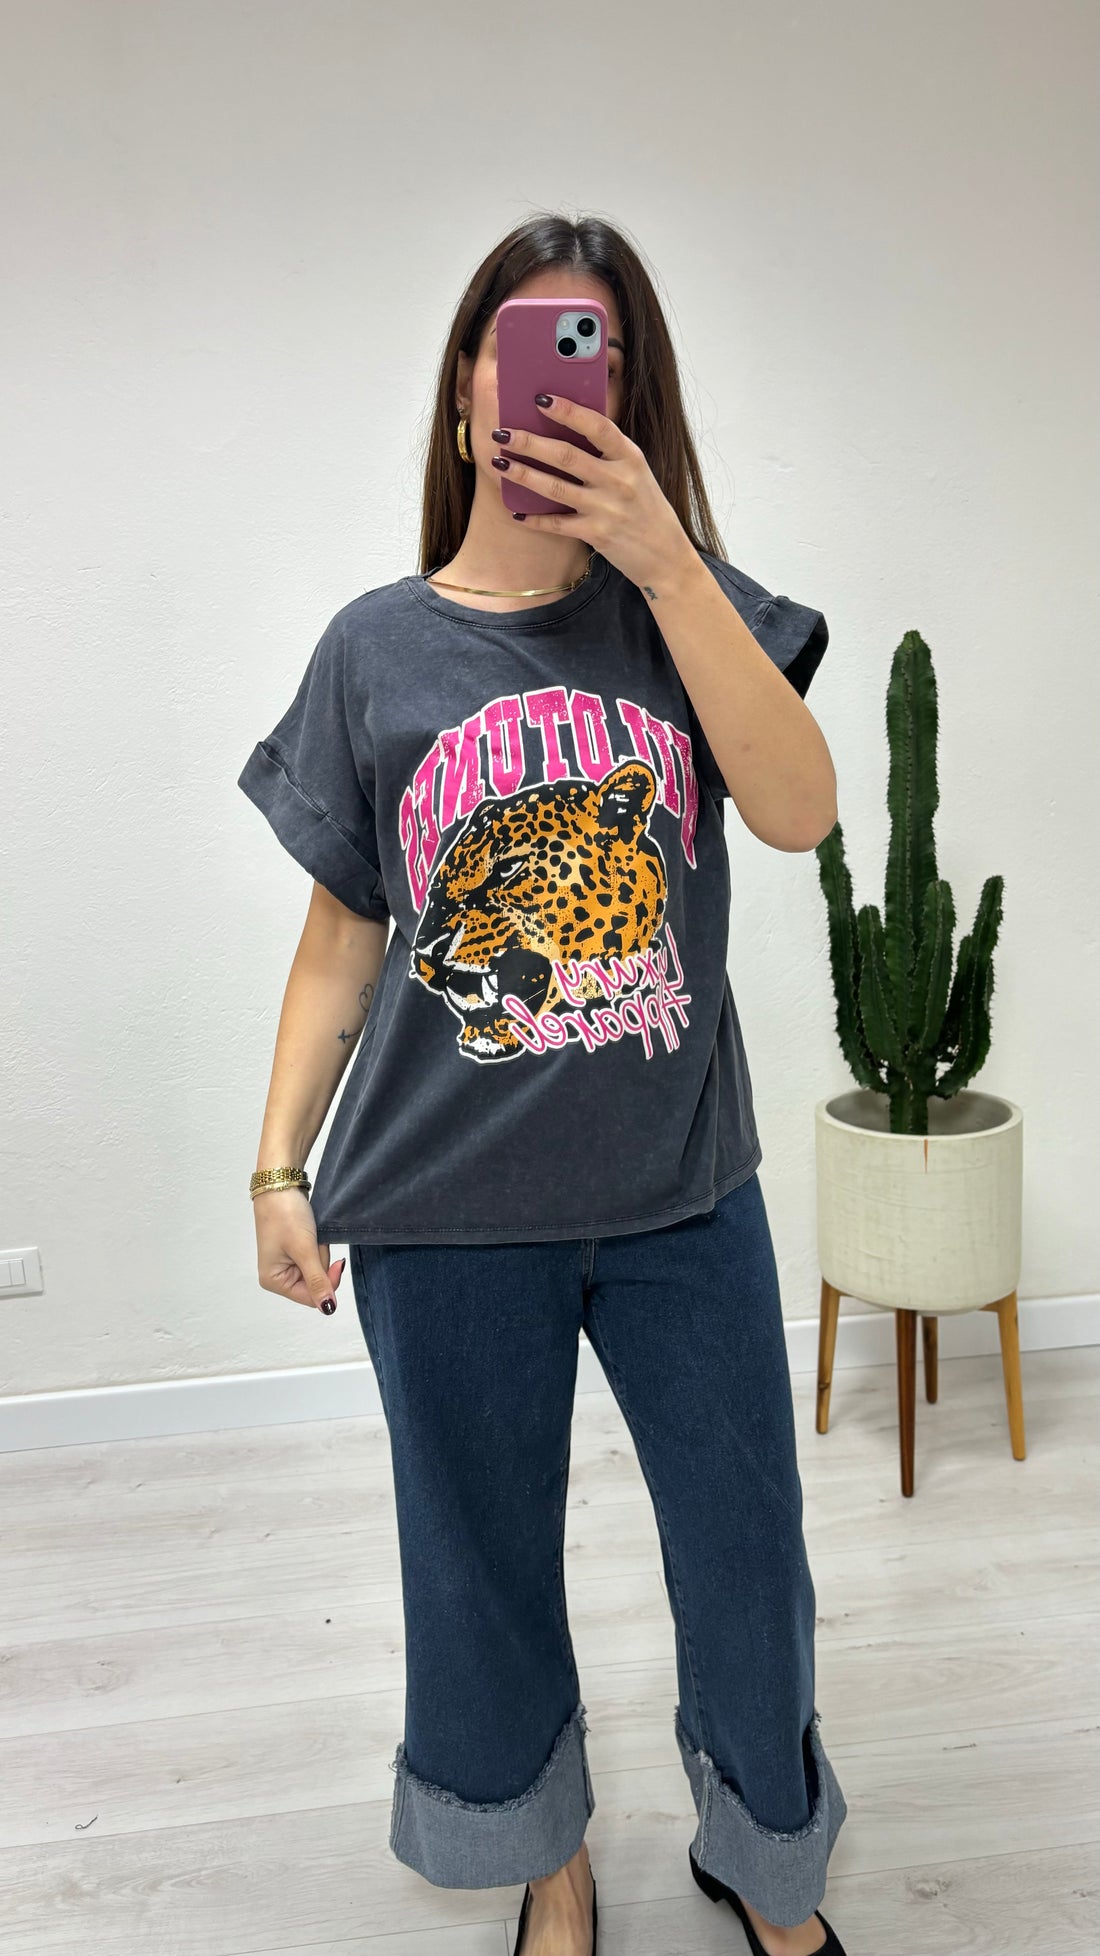 T-shirt Tiger